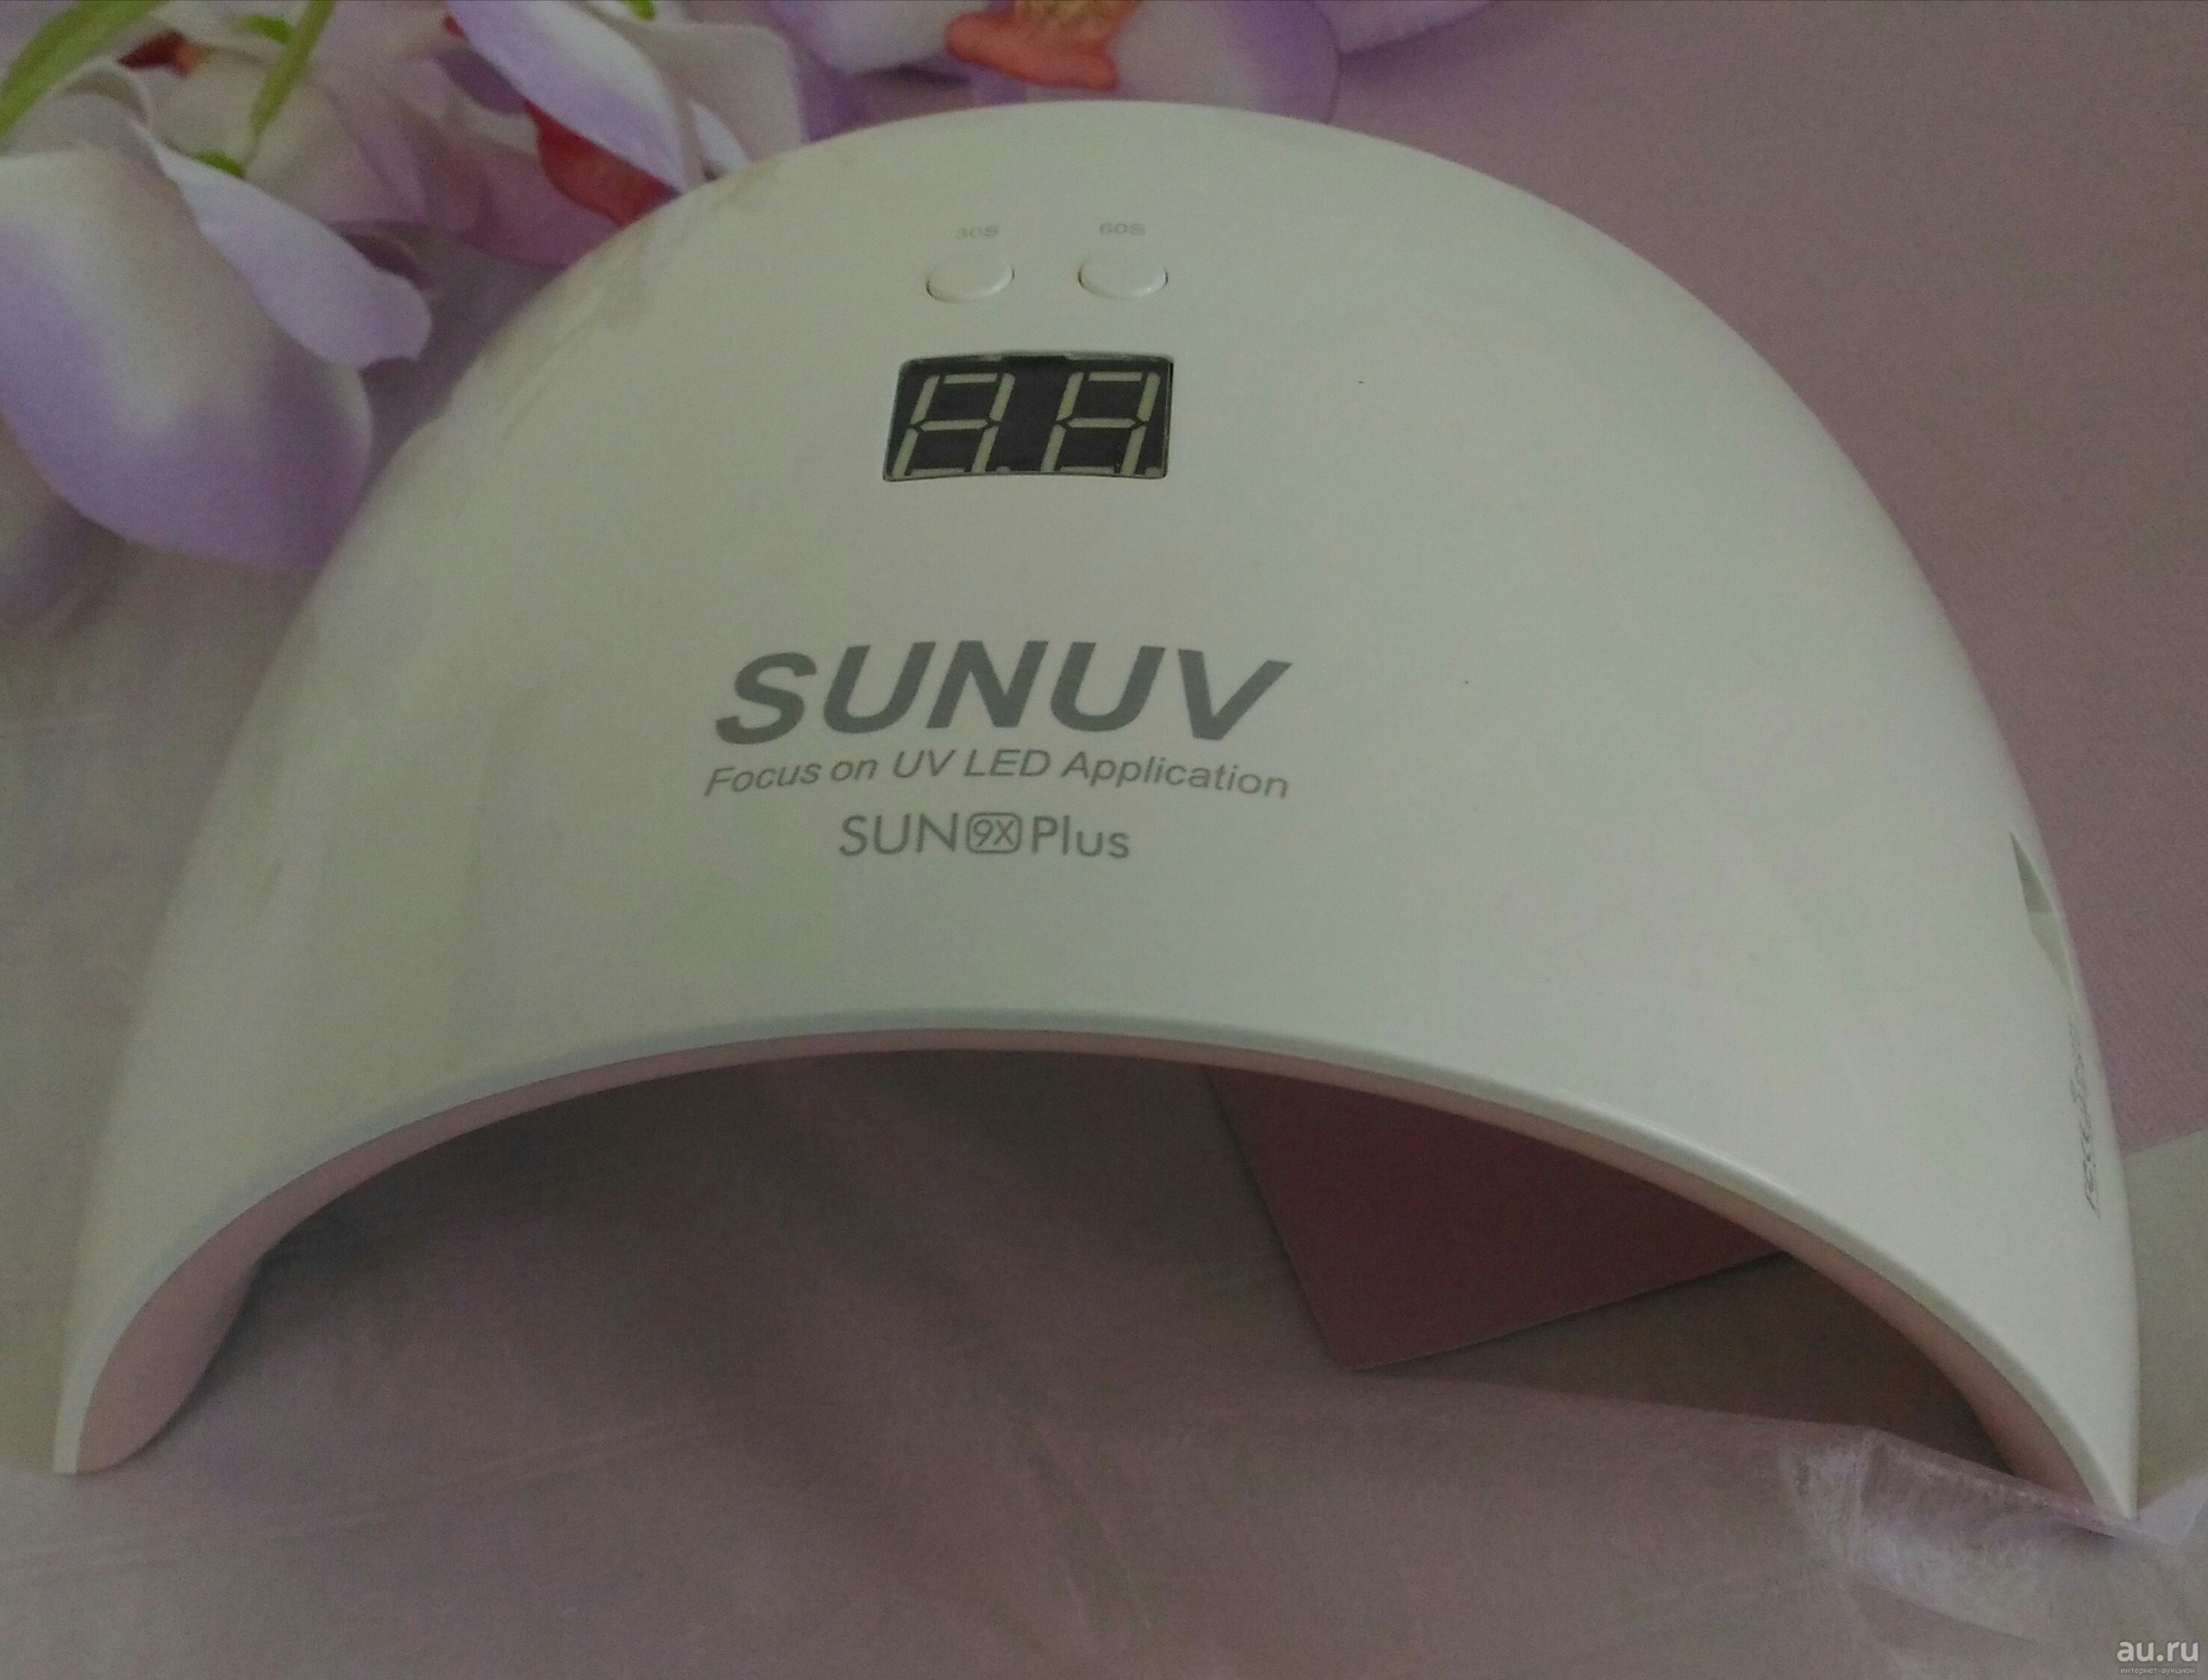  SUN 9C Plus  лампа для маникюра